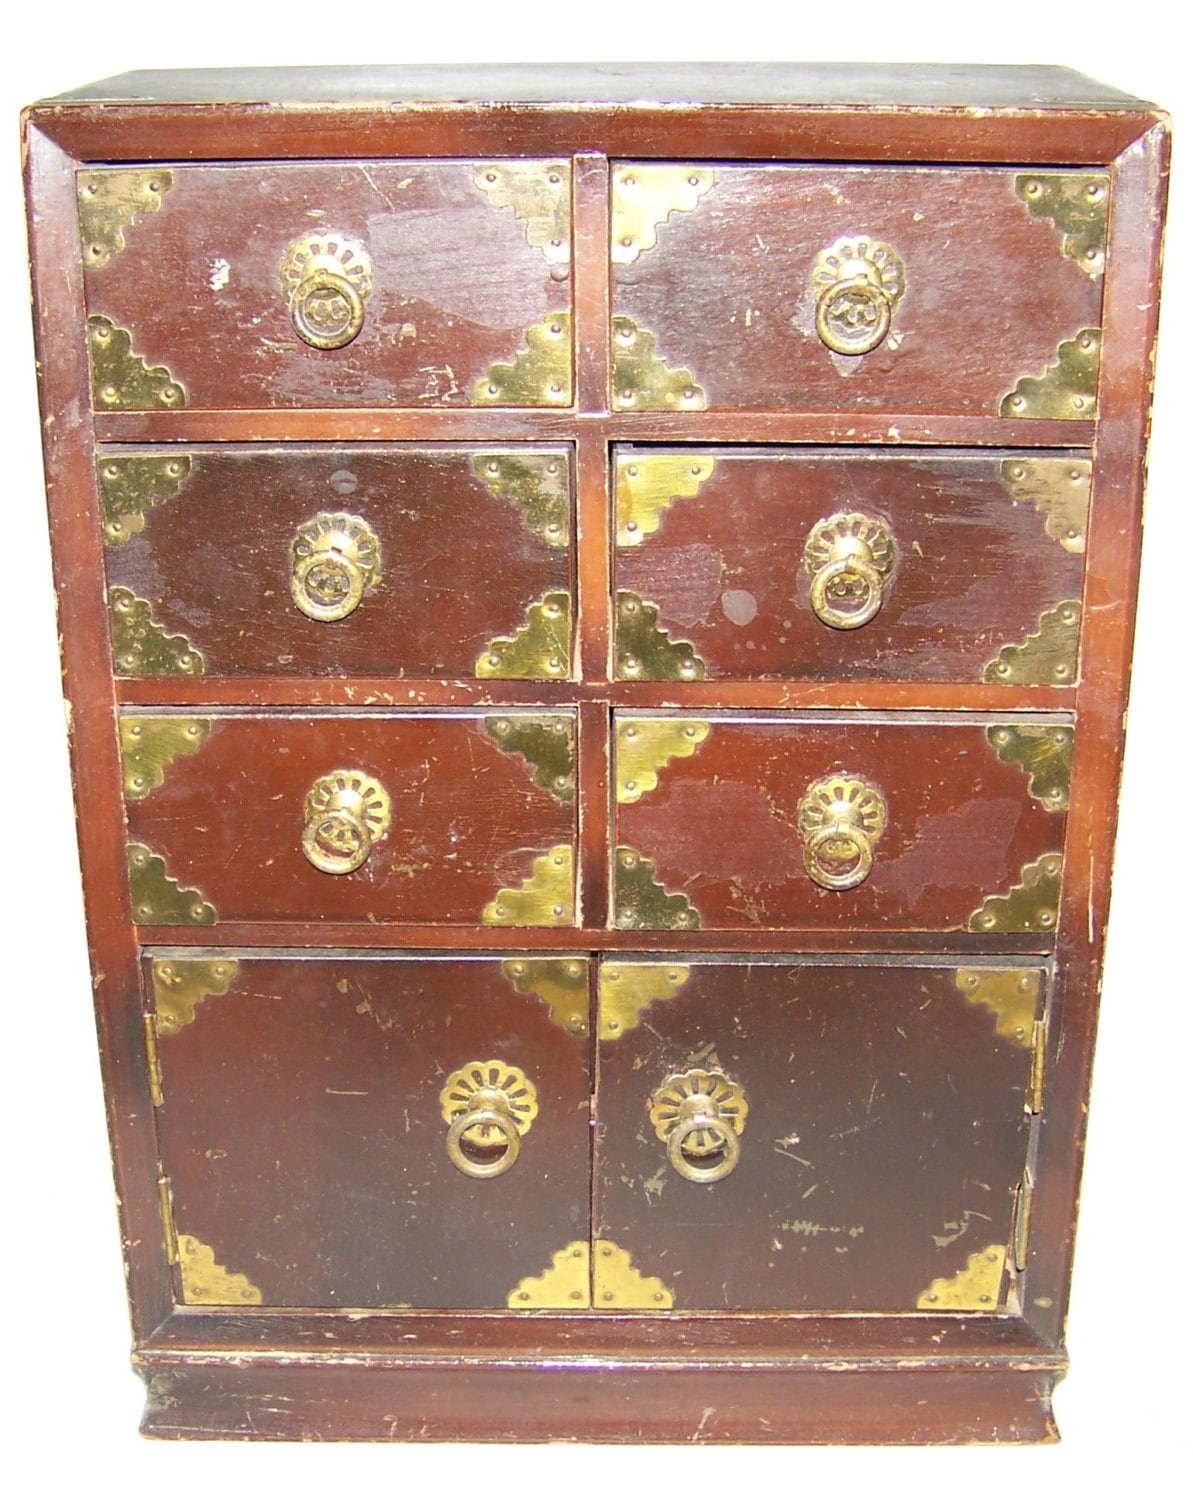 Antique Japanese Musical Jewelry Box Mahogany by AntiquesAtlanta